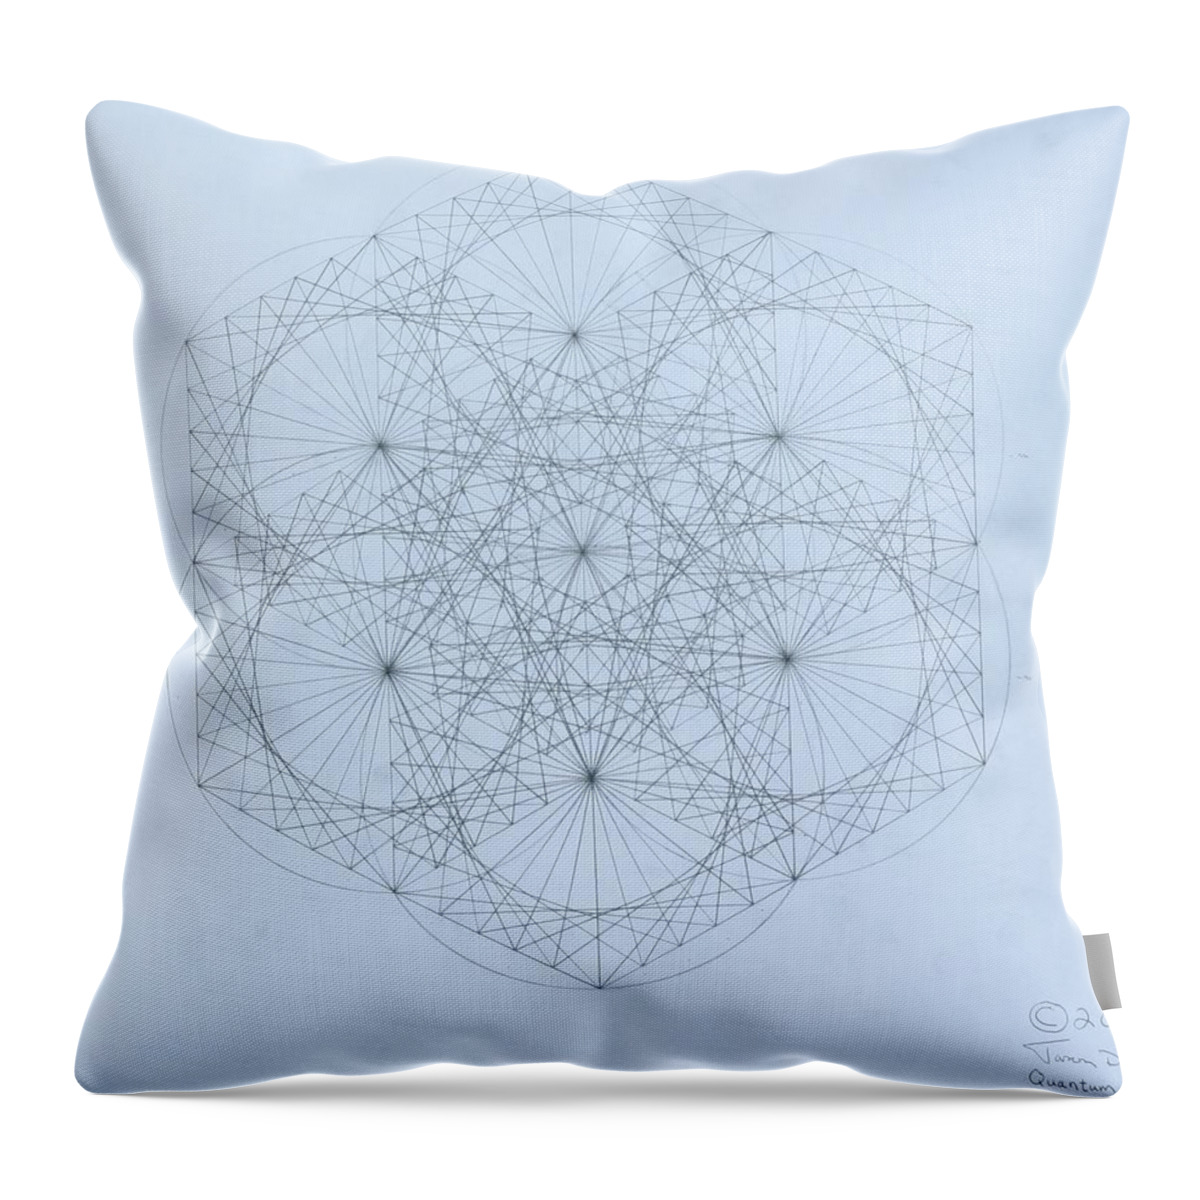 Jason Padgett Throw Pillow featuring the drawing Quantum Snowflake by Jason Padgett